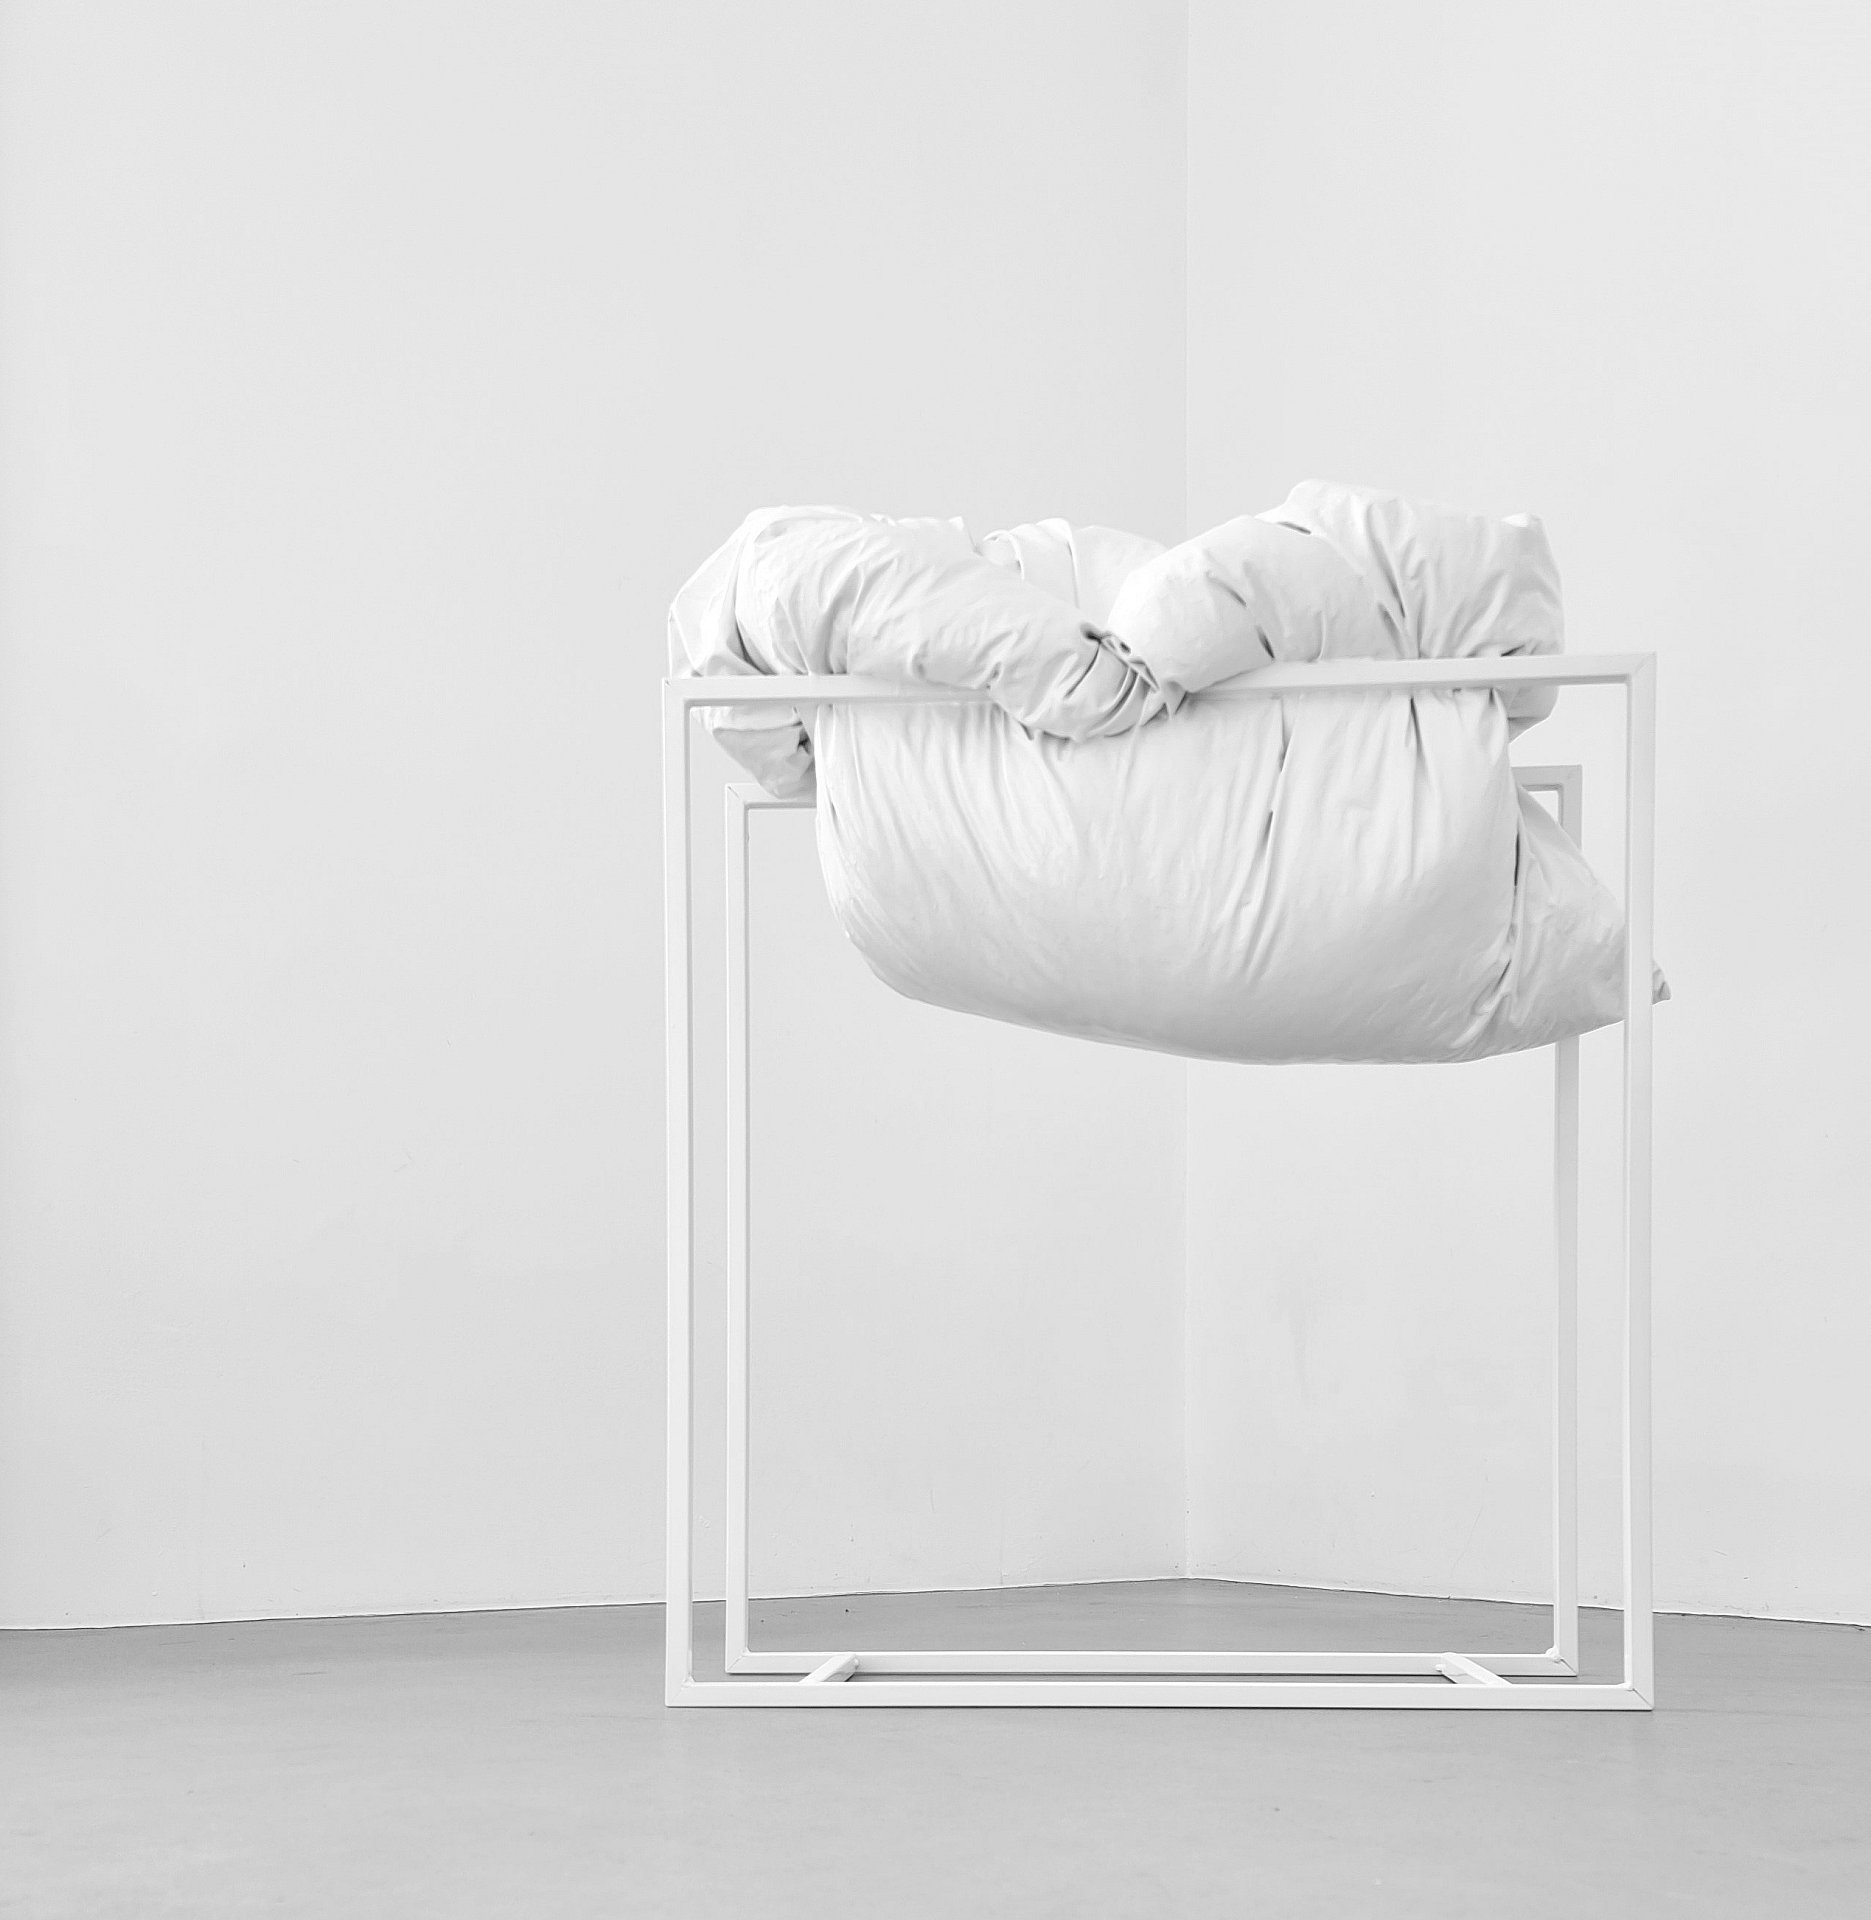 White pillow III), 202177 x 60 x 40 cmMixed media